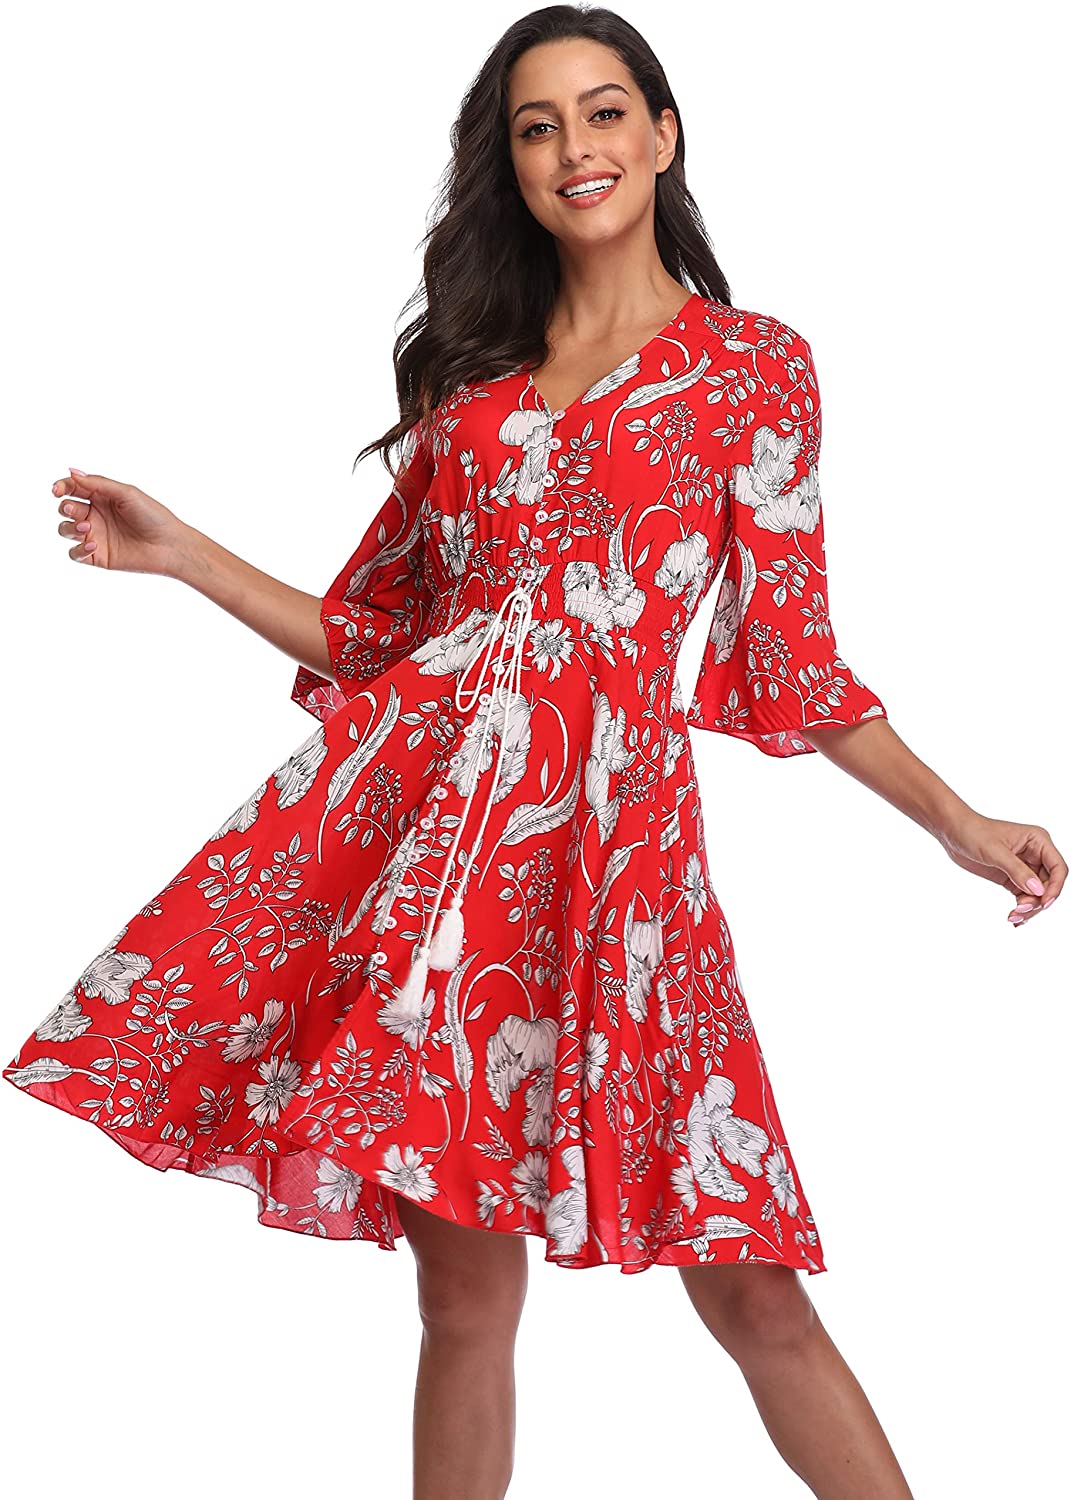 BestWendding Summer Floral Flowy Party Dresses Women Casual Button Up Split  Swin | eBay